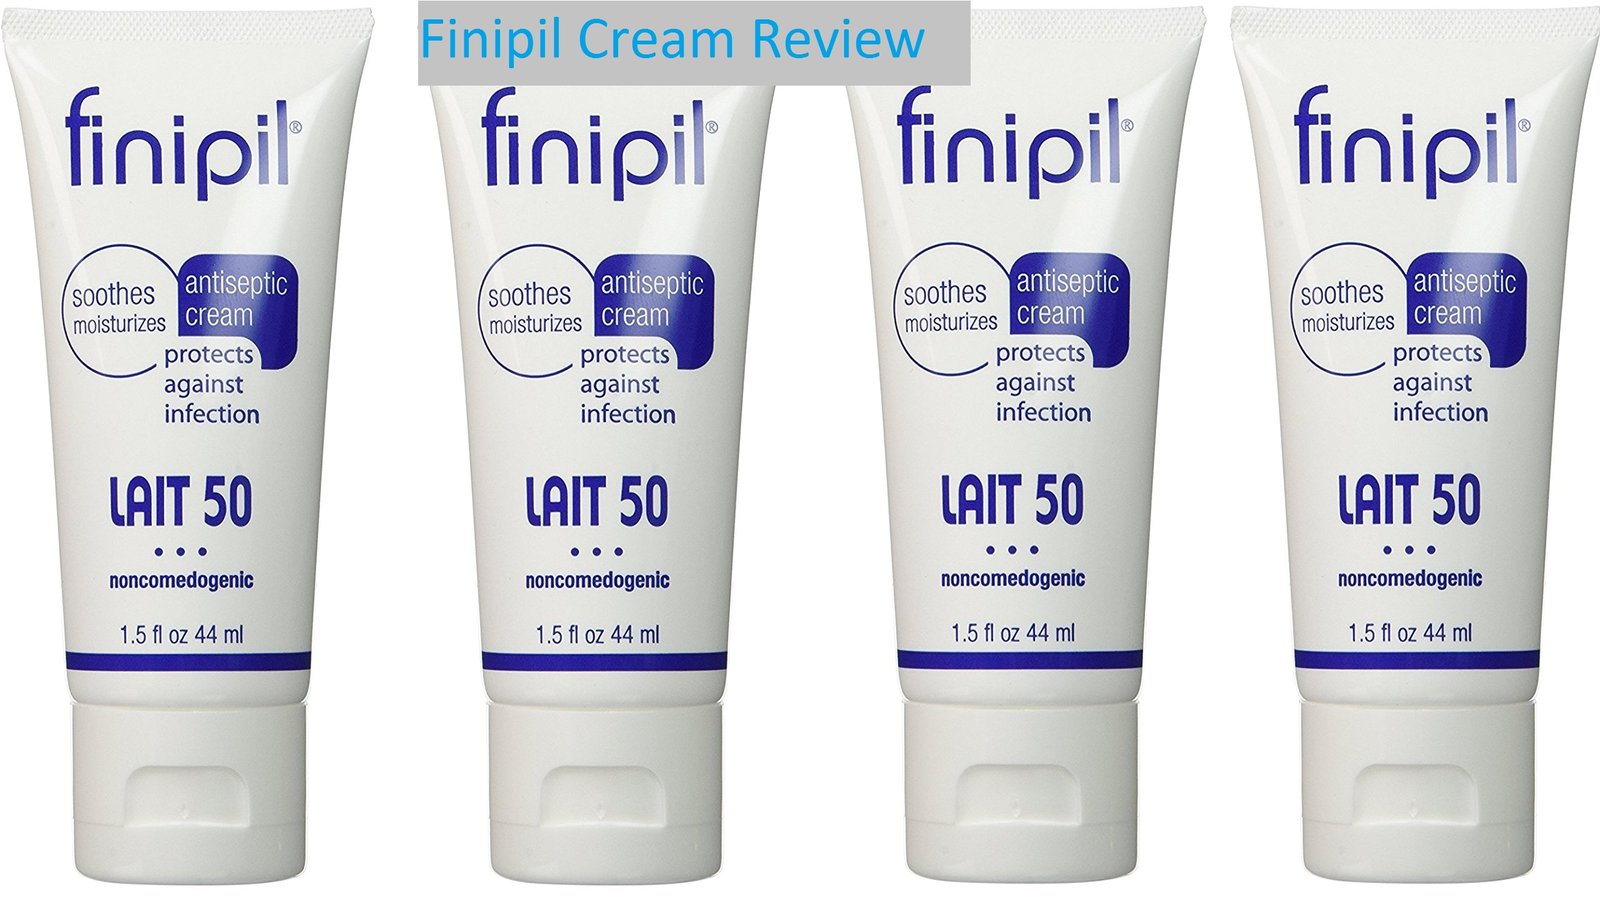 Finipil Cream Review